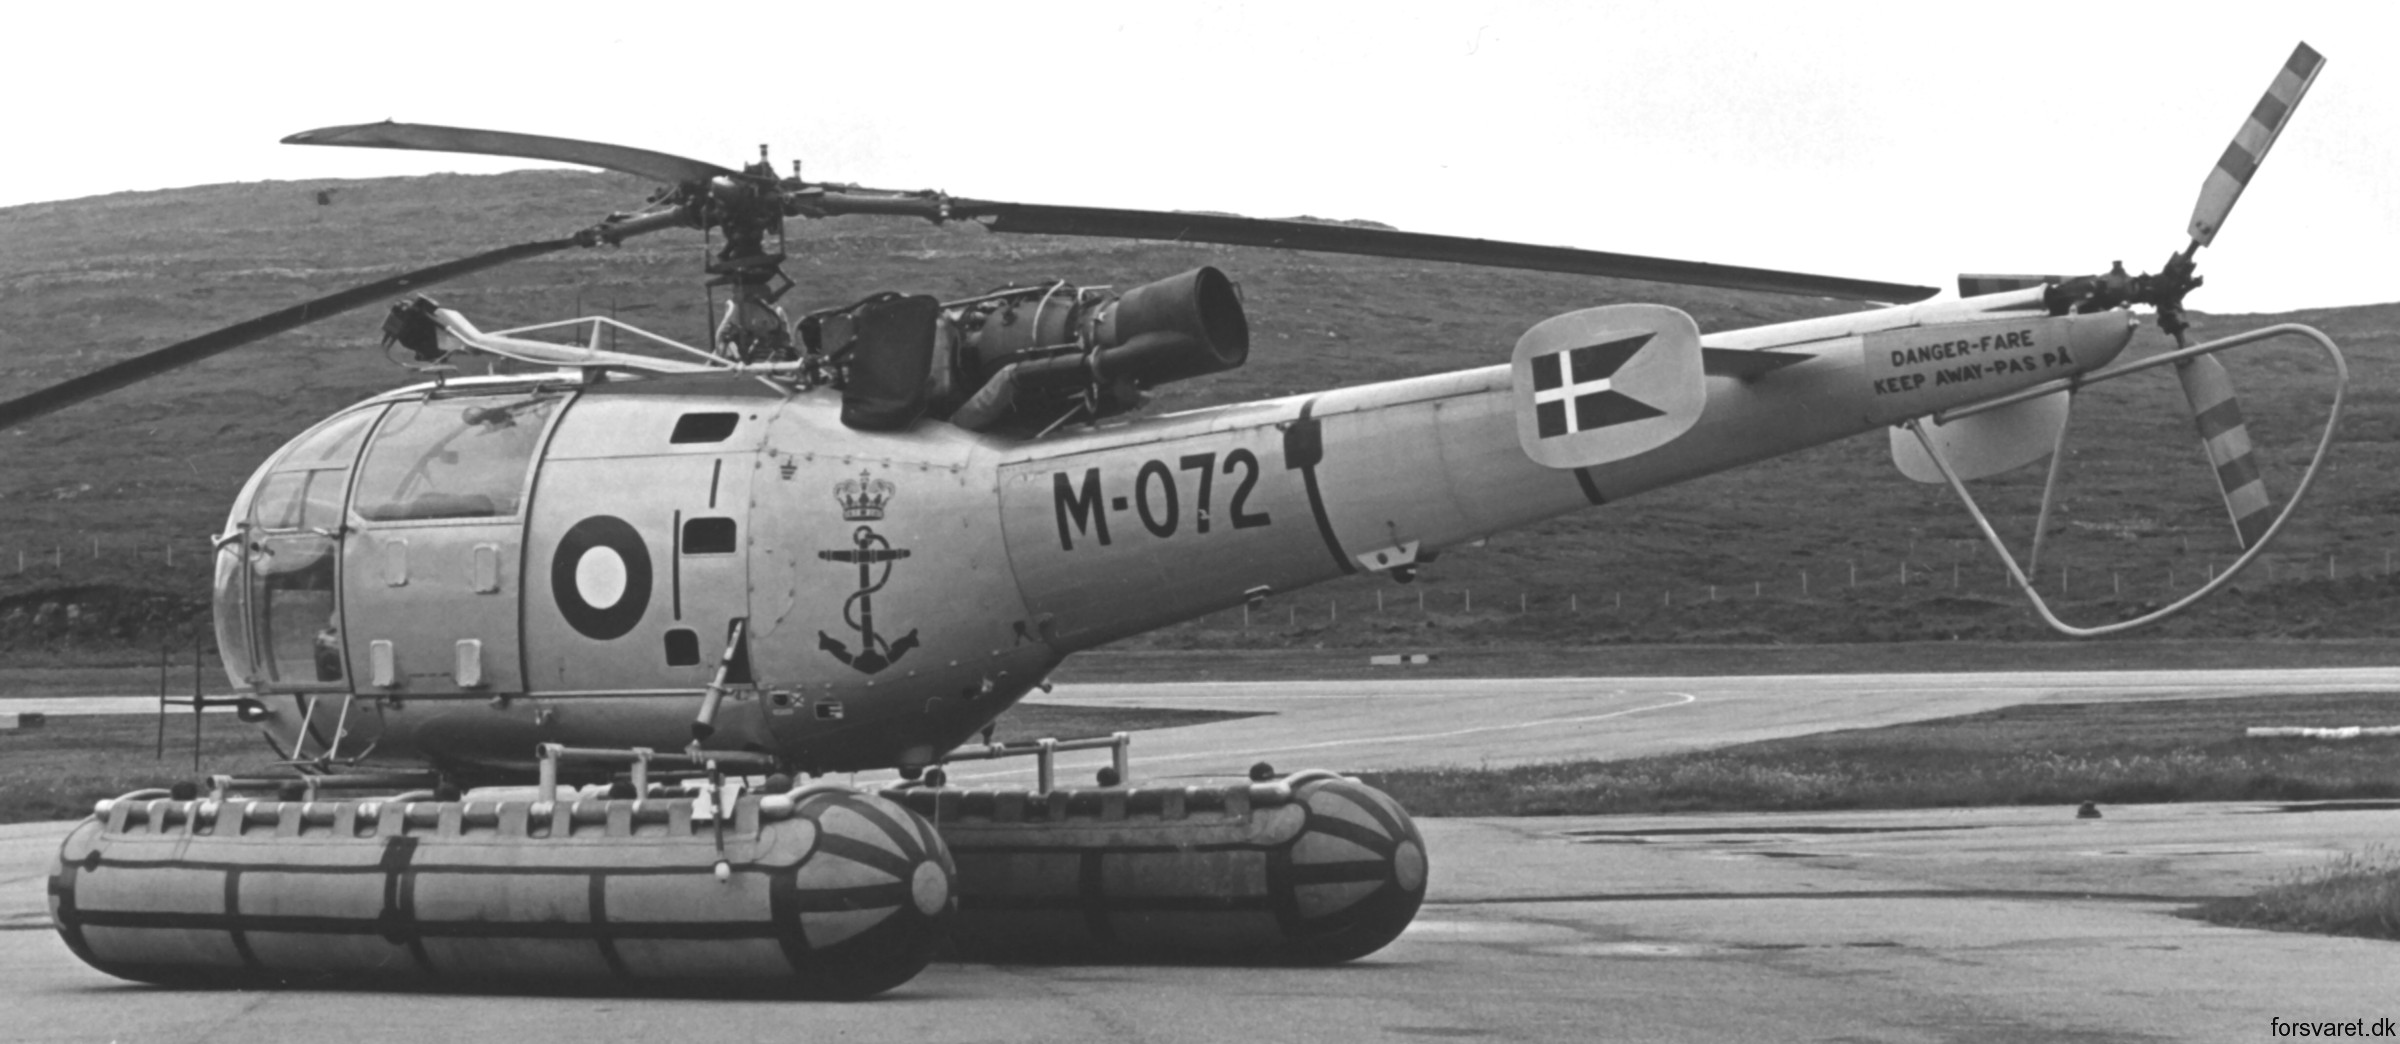 sa 316b alouette iii helicopter royal danish navy søværnet kongelige danske marine sud aviation m-072 08